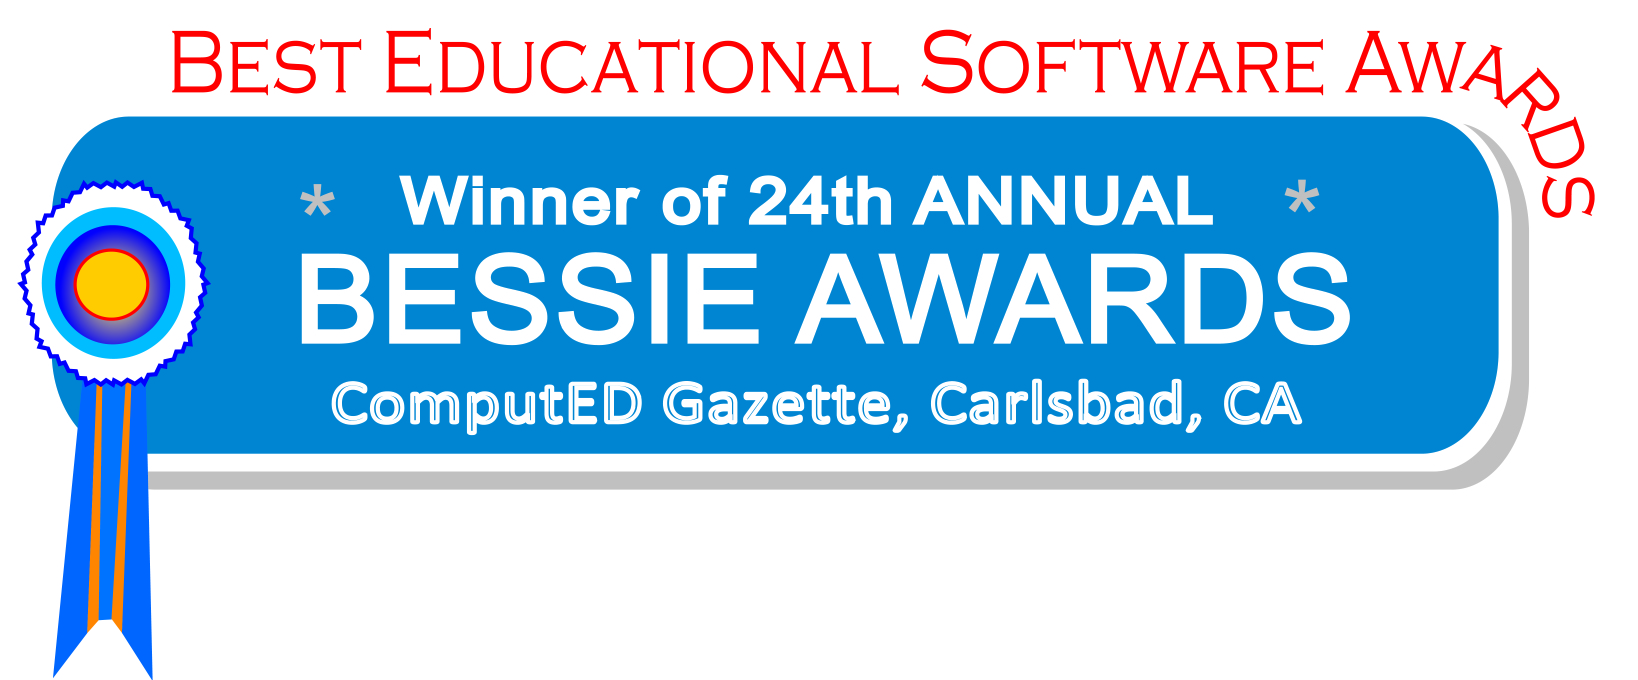 BESSIE AWARDS Award Winner 2018